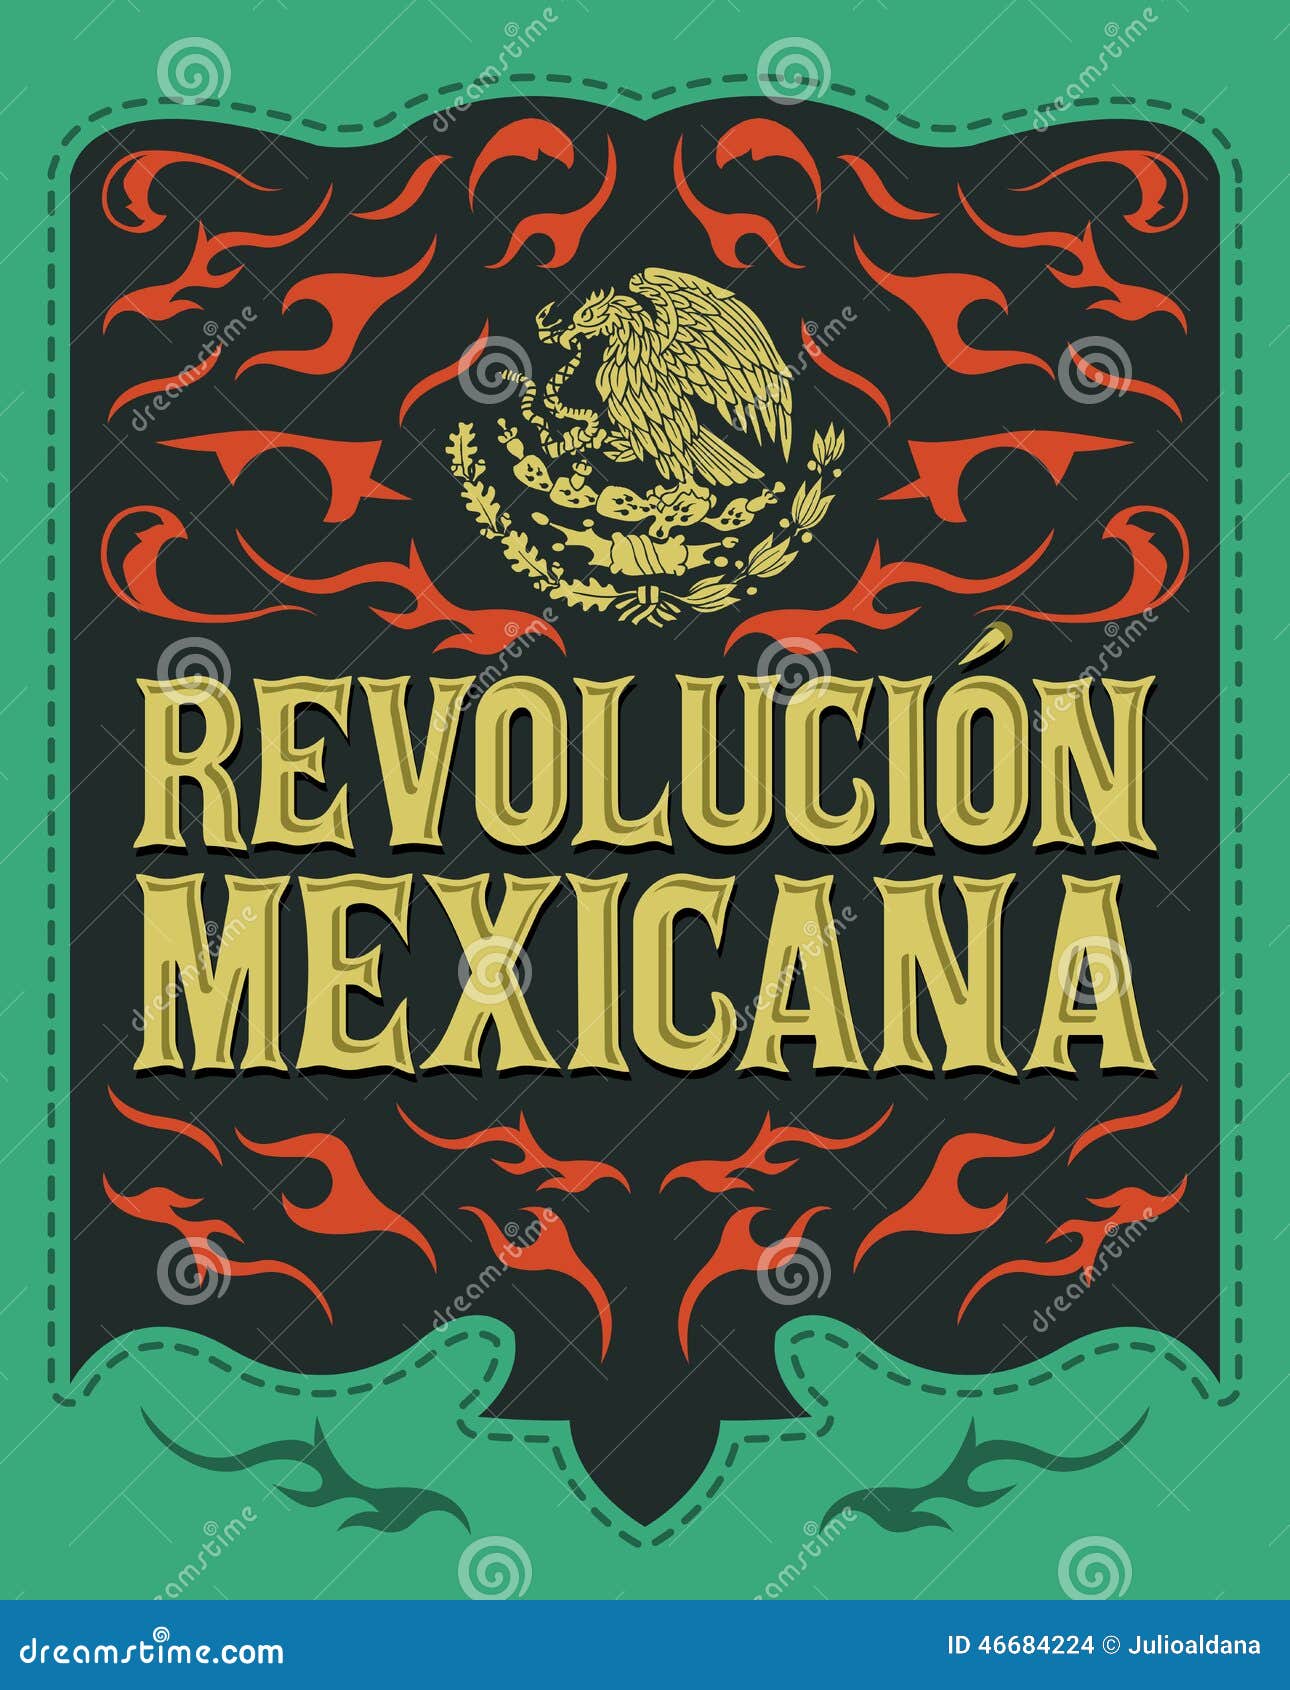 revolucion mexicana - mexican revolution spanish text